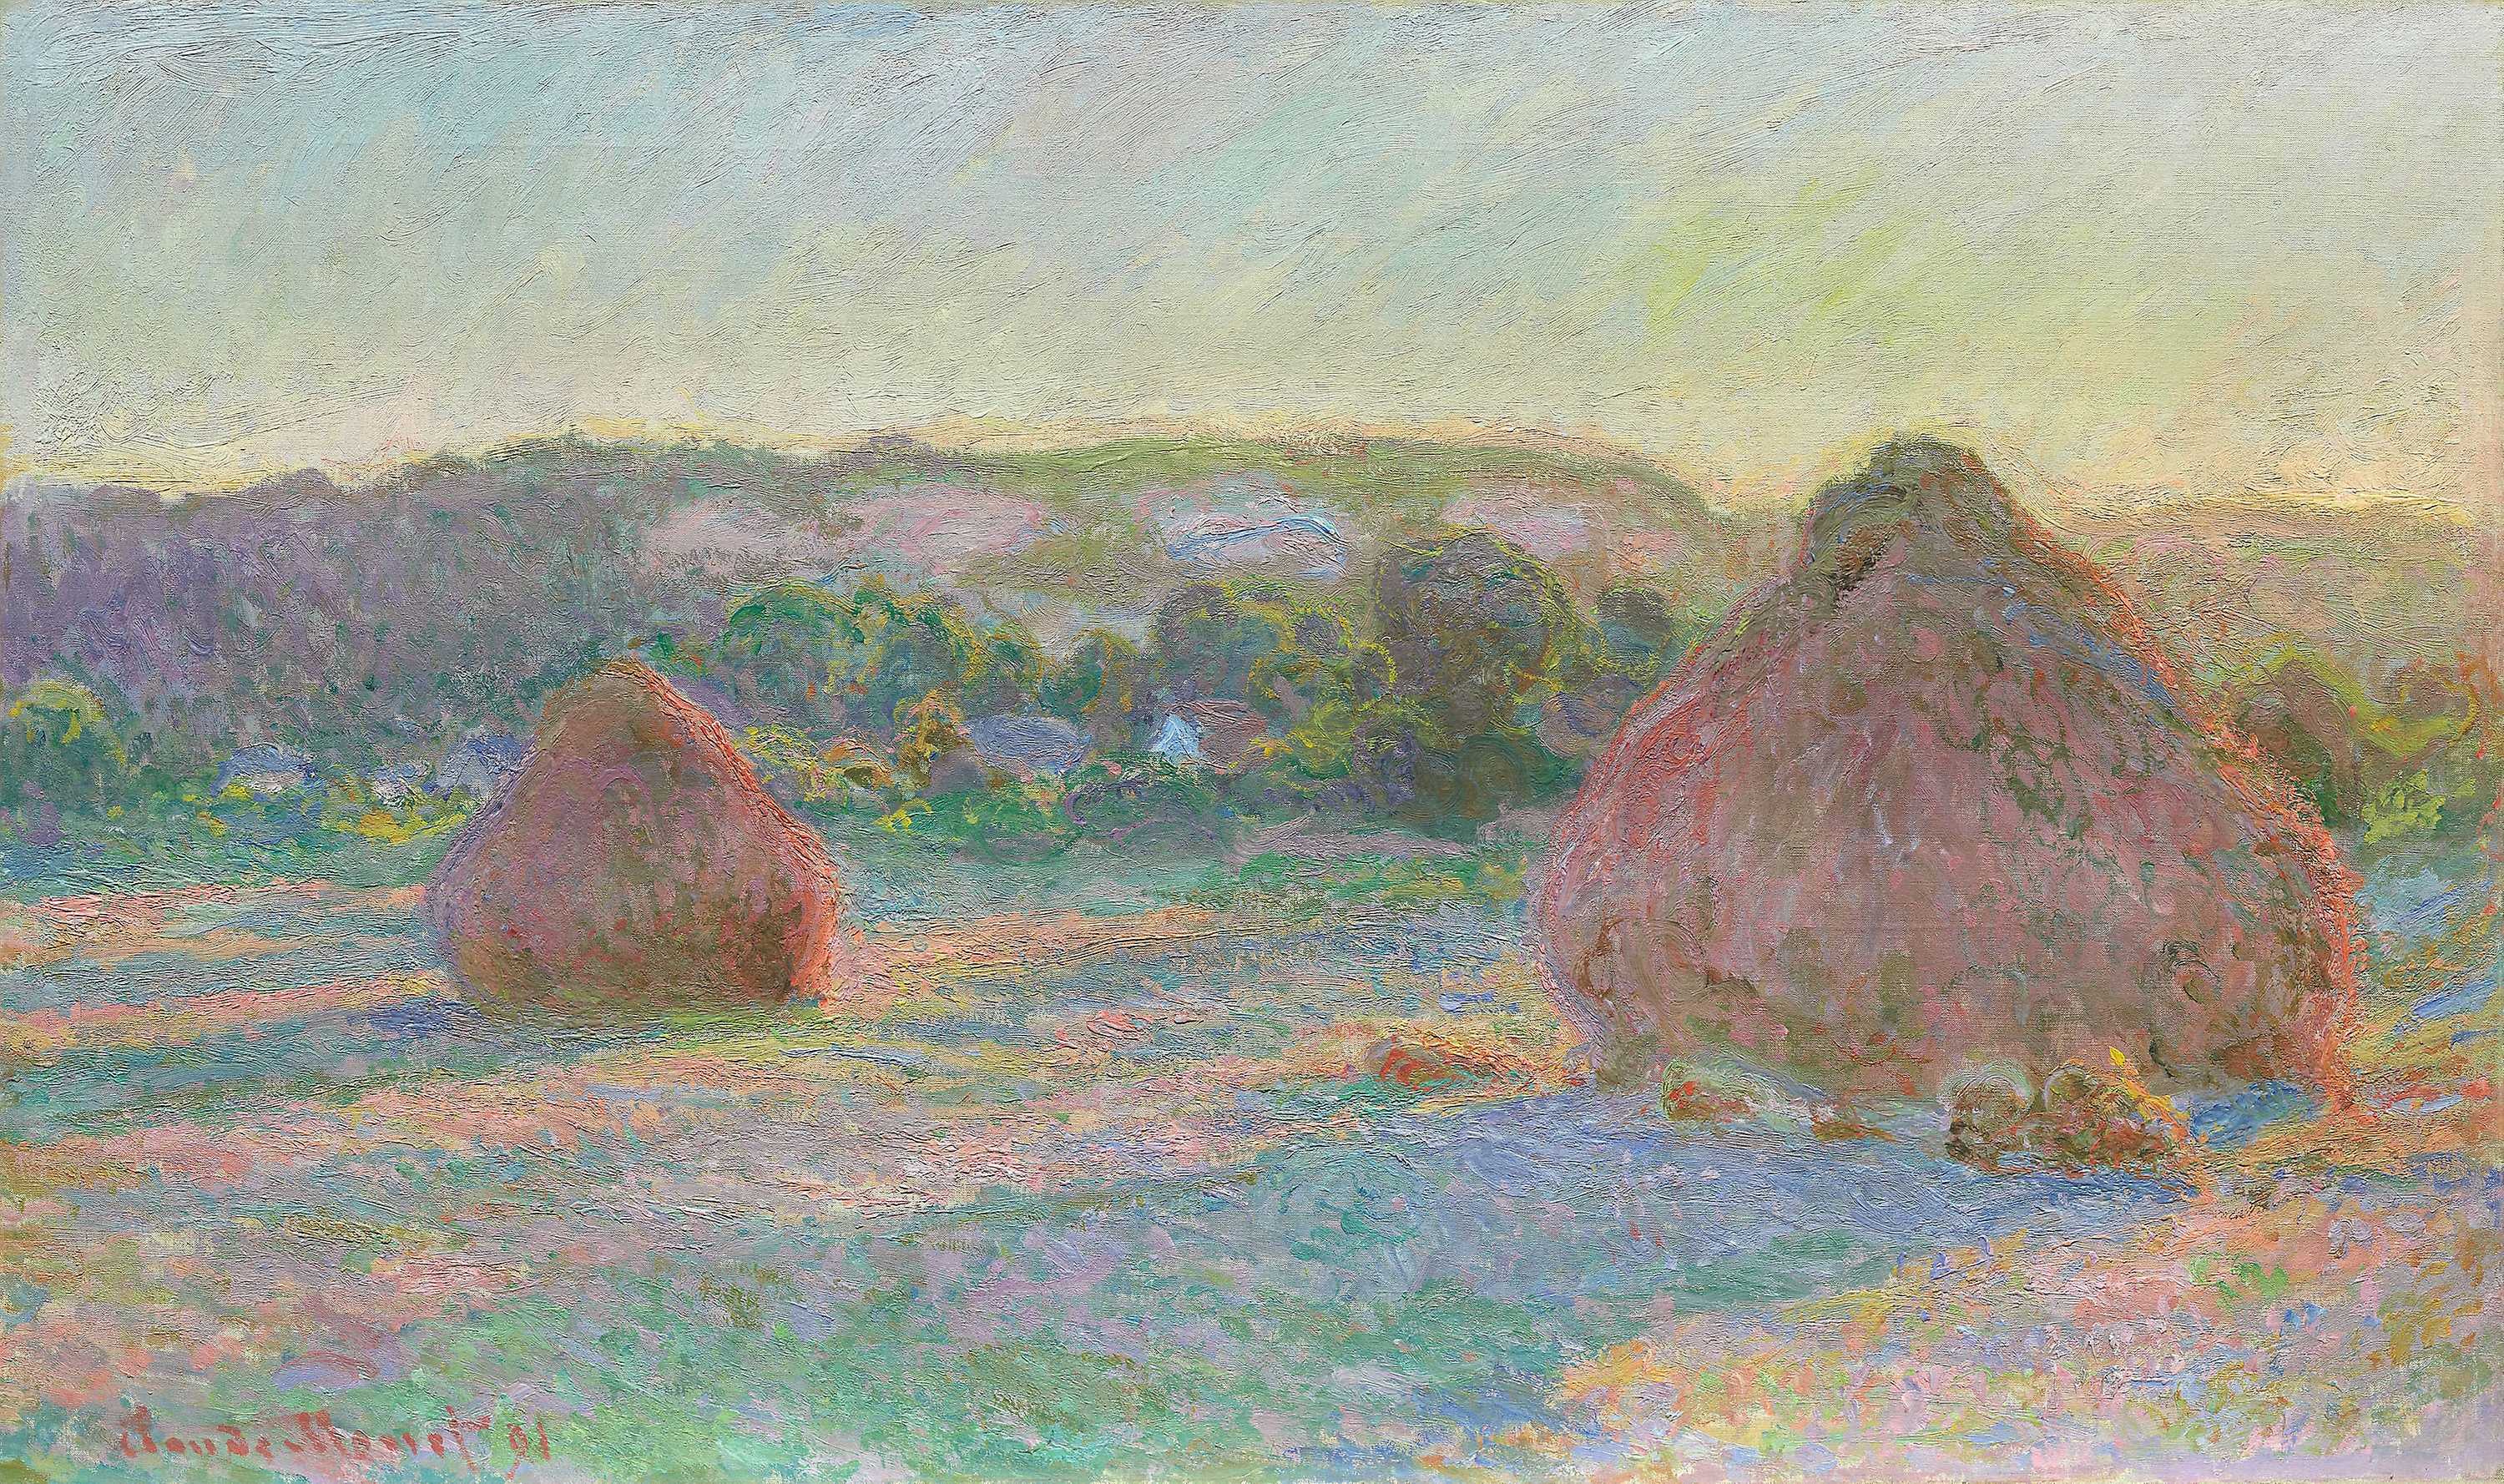 خرمن‌های گندم (پایان تابستان) by Claude Monet - 1891 - 60 x 100.5 cm 